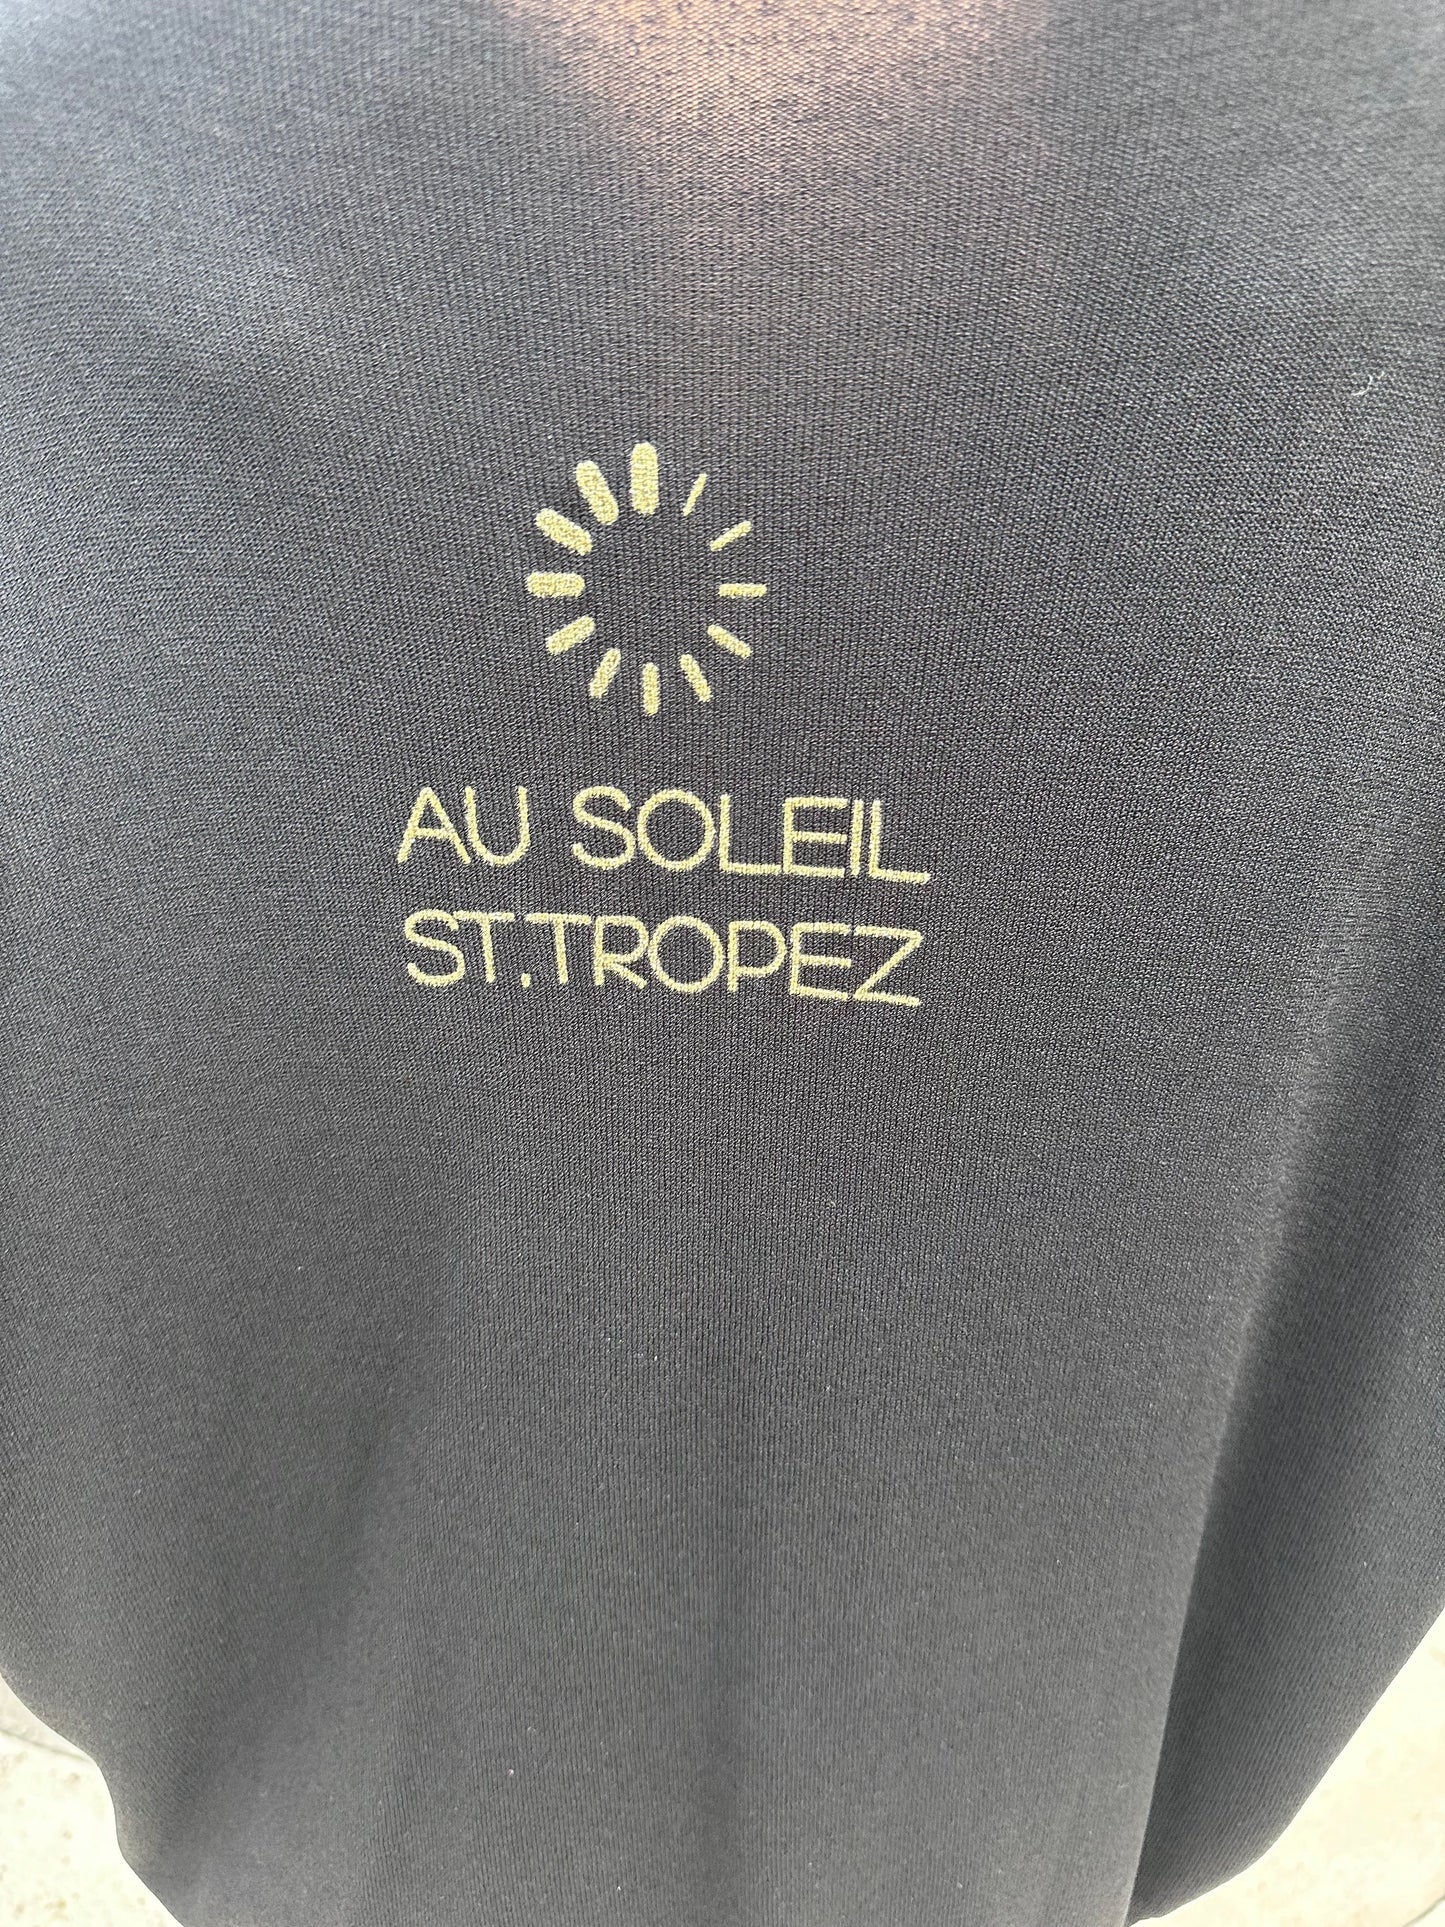 Au Soleil Pull Cigale Shirt - Premium Top from Marina St Barth - Just $125! Shop now at Marina St Barth